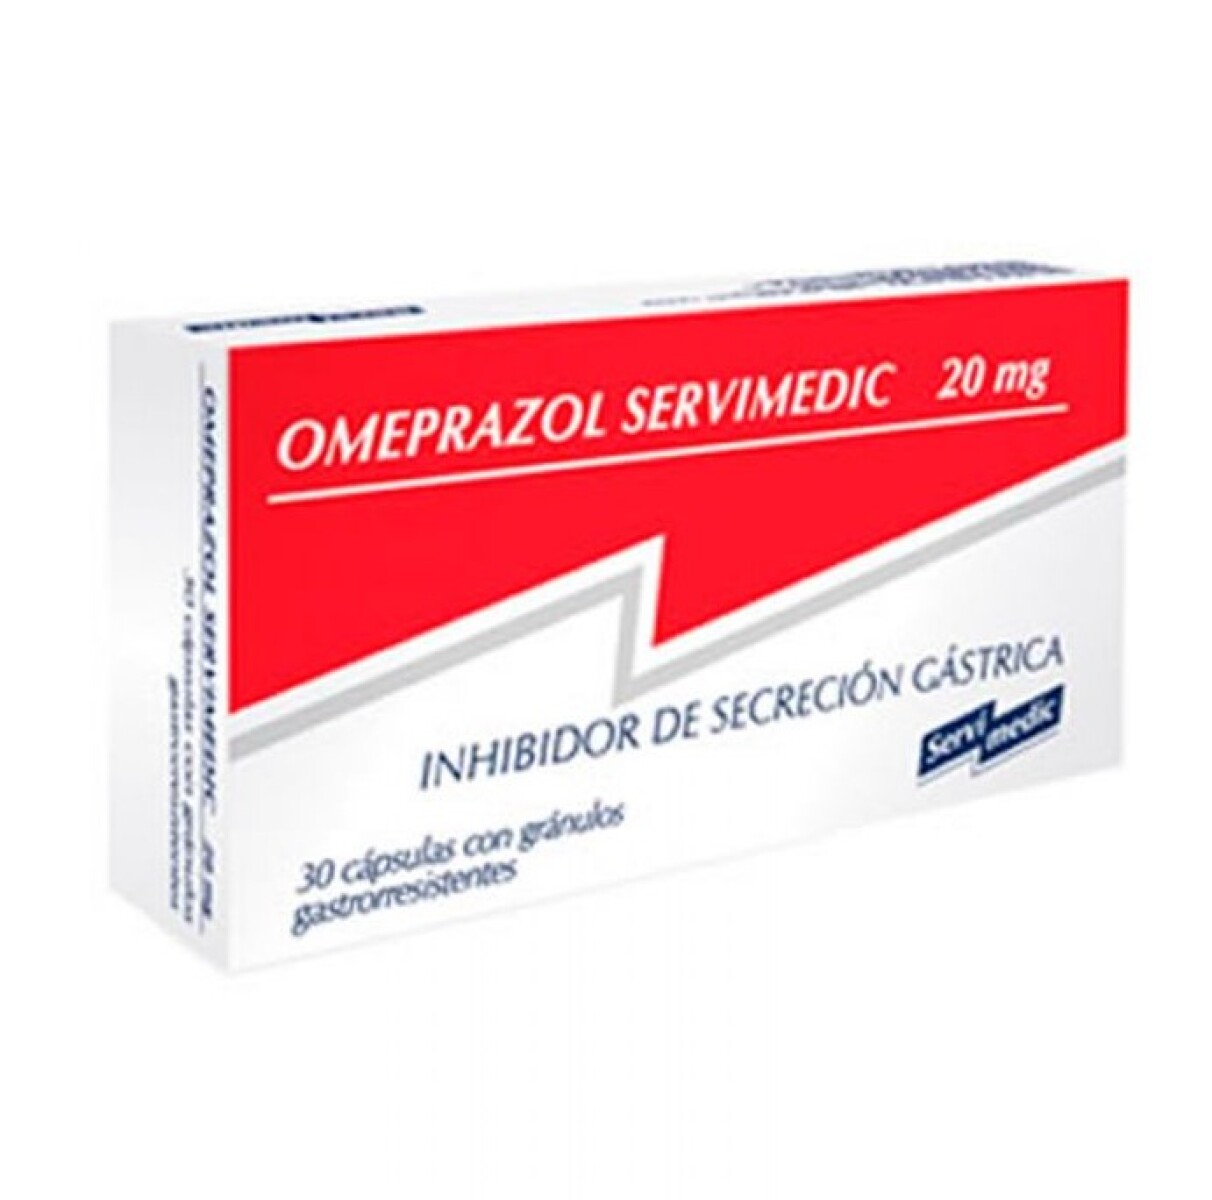 Omeprazol Servimedic 20 Mg 